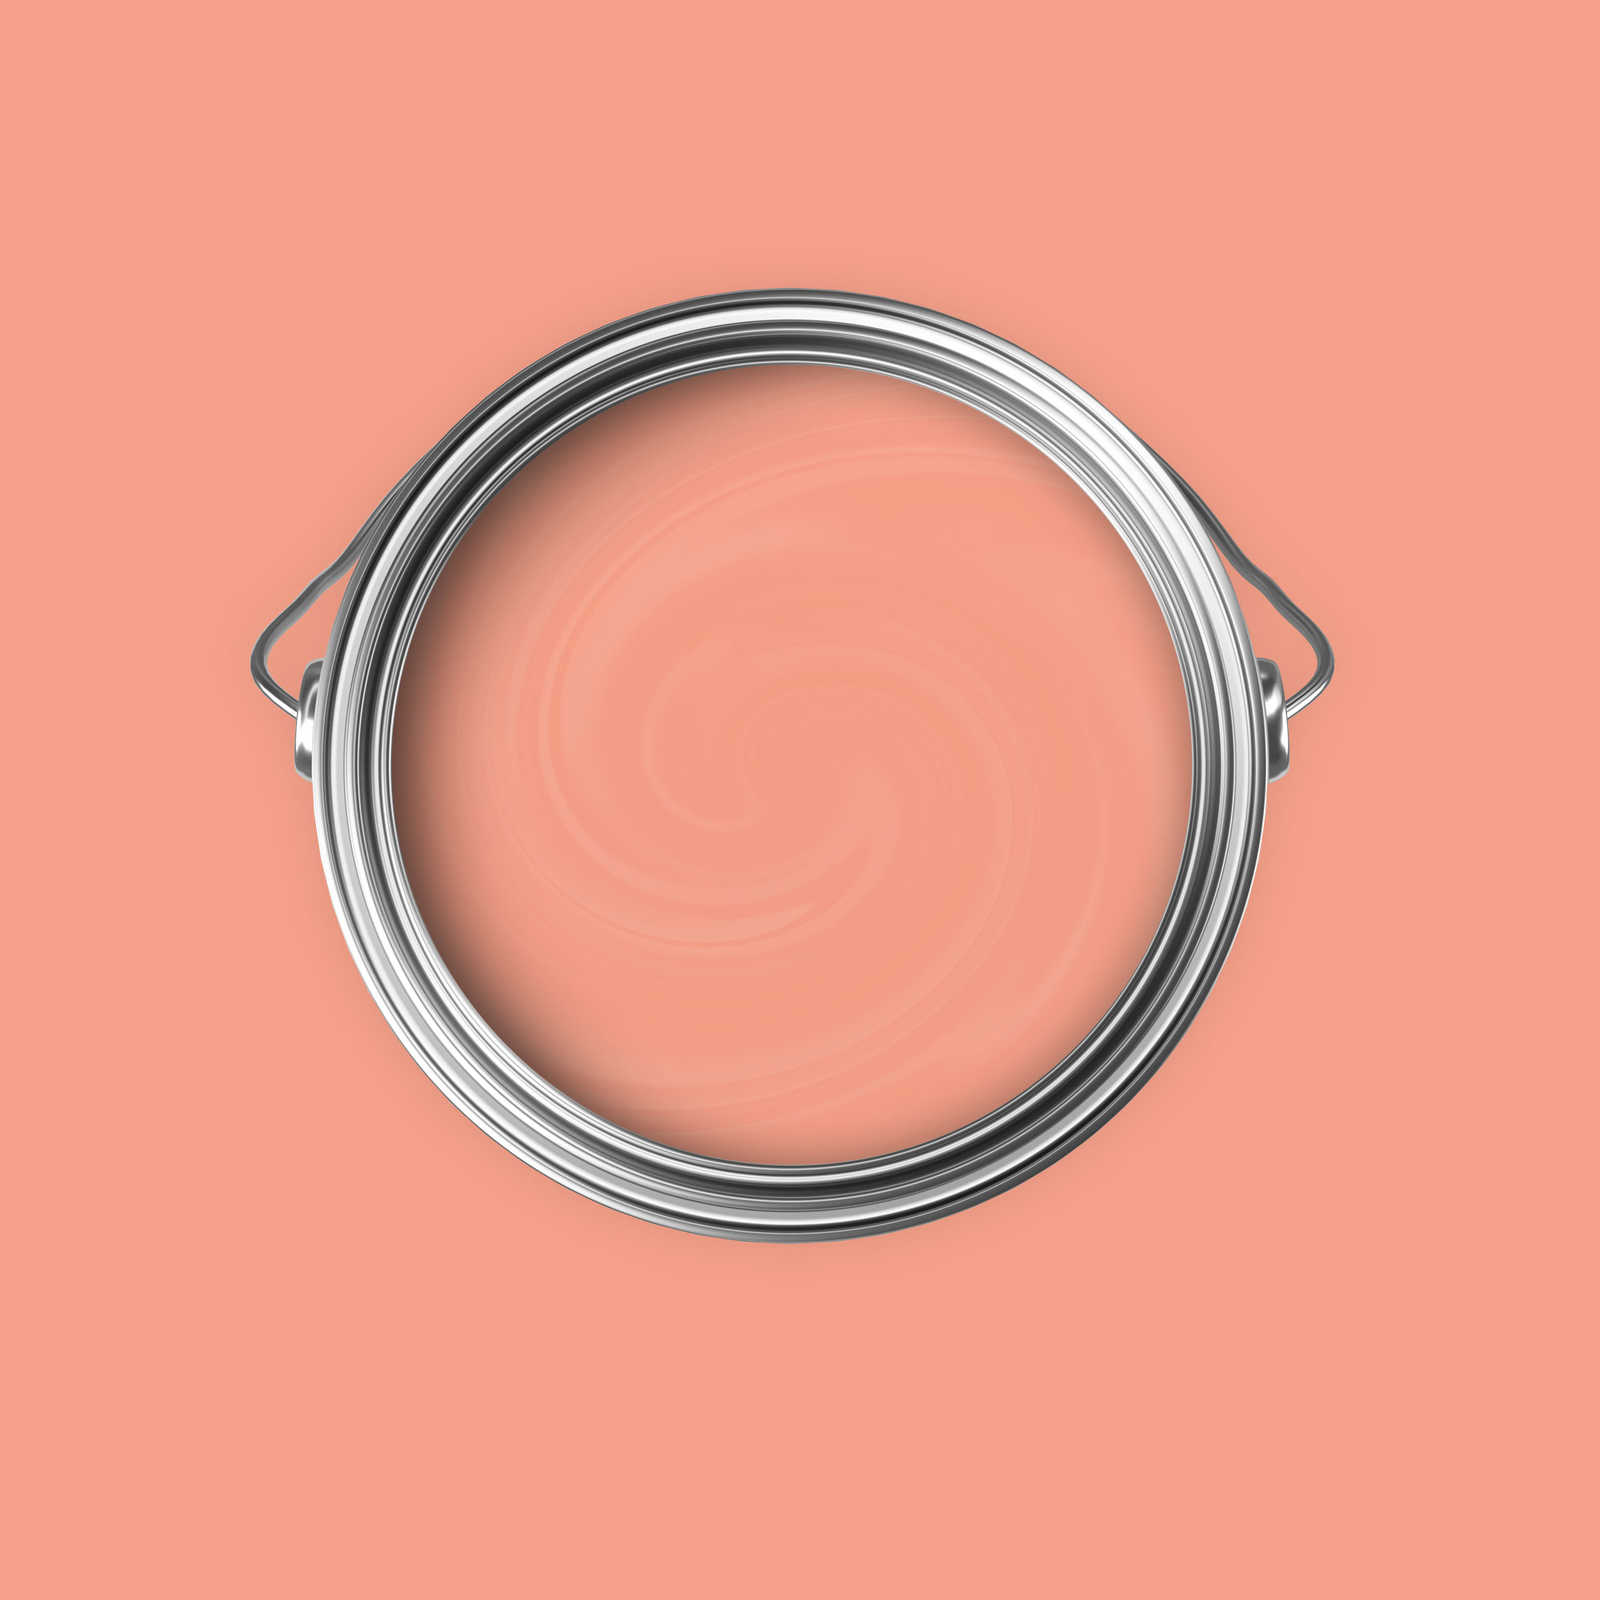             Premium Wall Paint Harmonious Salmon »Active Apricot« NW914 – 5 litre
        